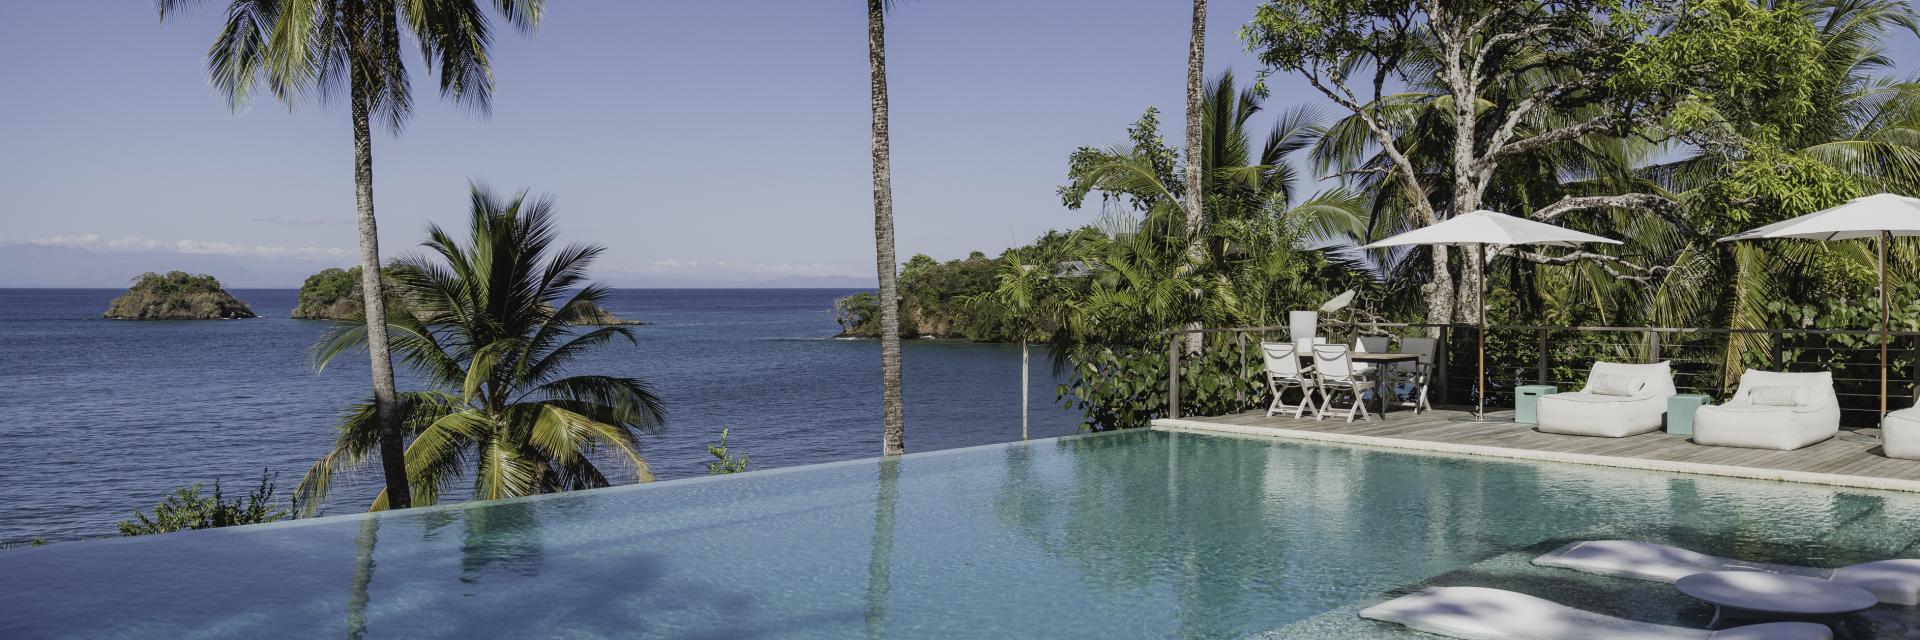 Islas Secas Resort Pool